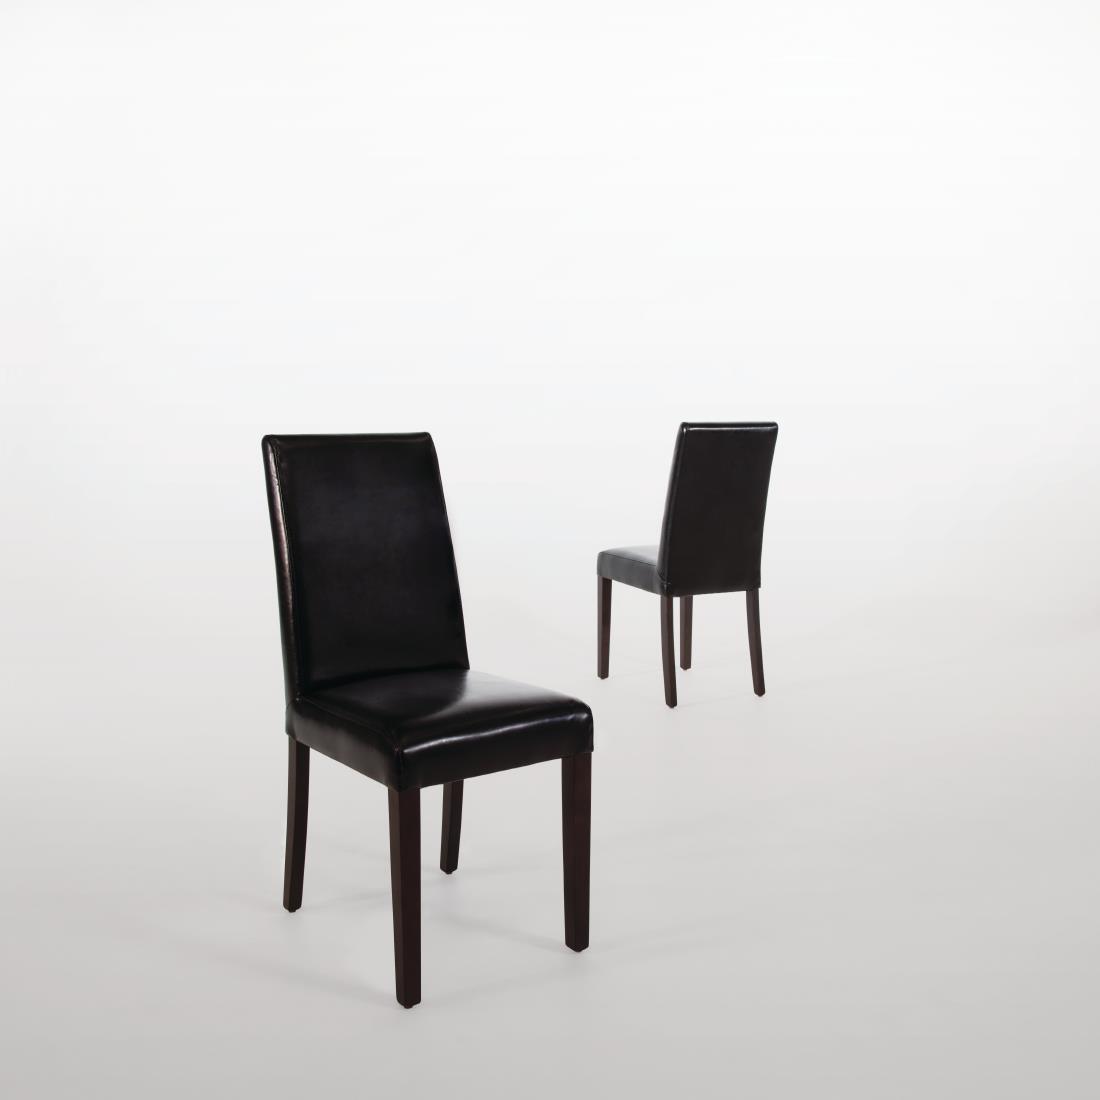 Bolero Faux Leather Dining Chair Black (Box 2) - GF954  - 6